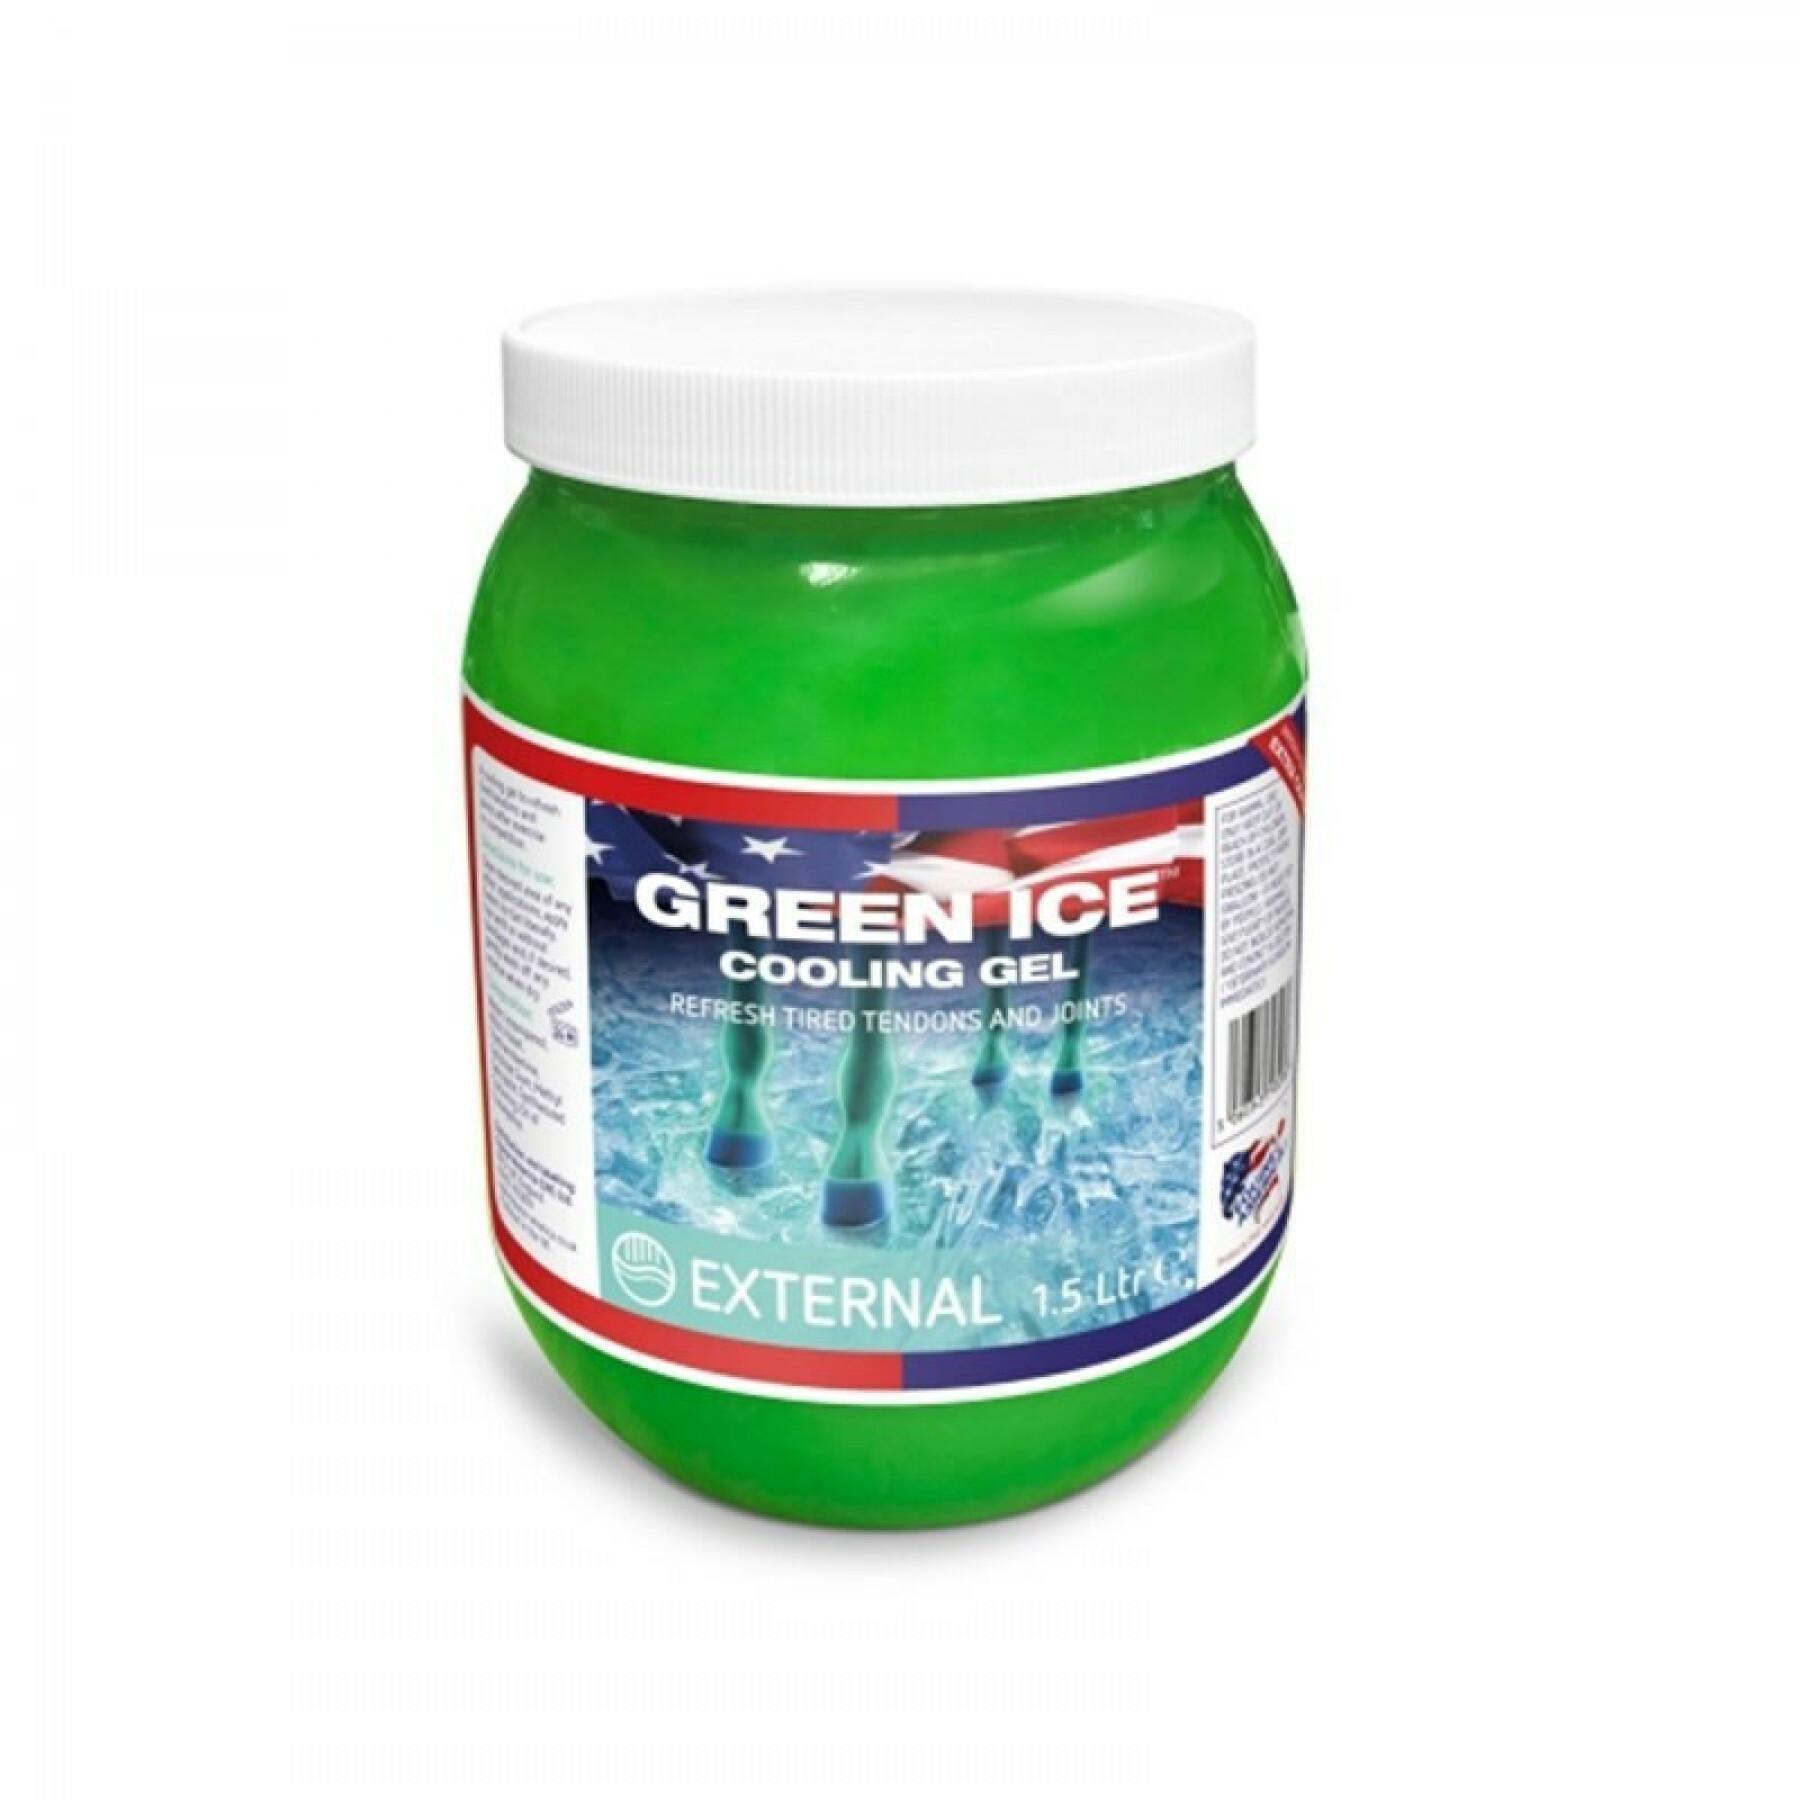 Gel refrescante para caballos Equine America green ice 1,5 l